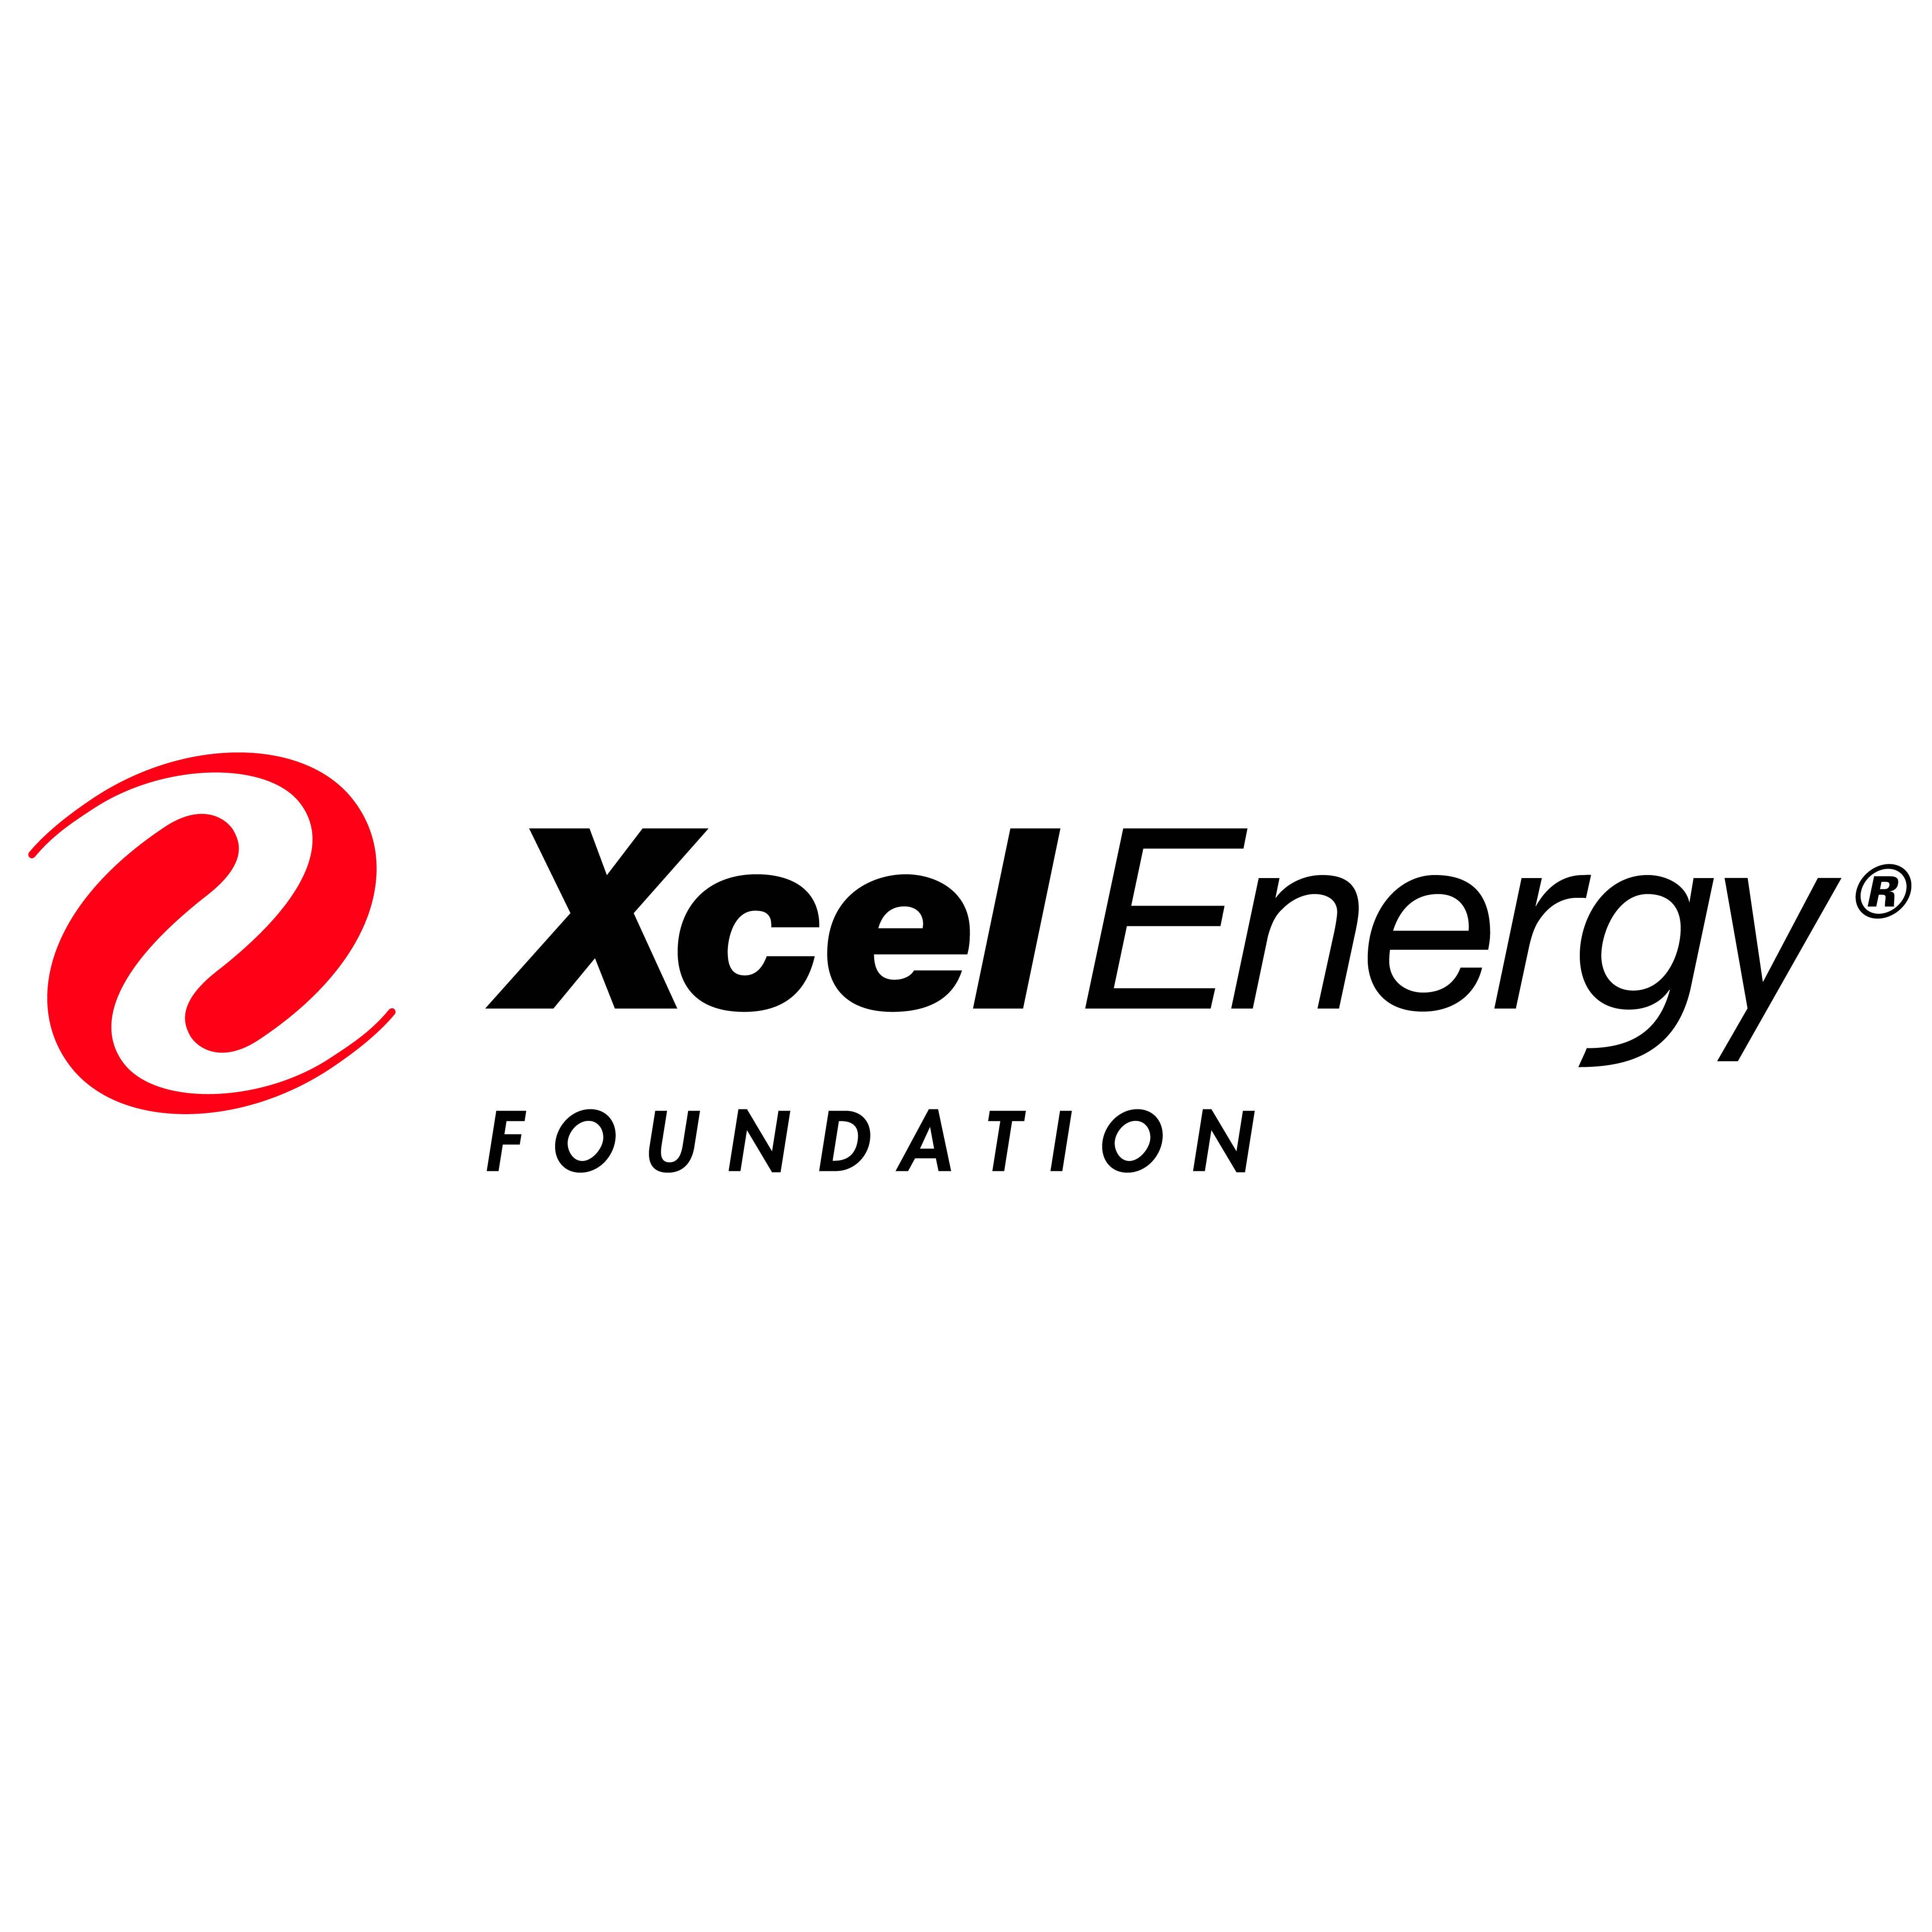 XCEL ENERGY ELECTRICAL POWER DISTRIBUTION SCHOLARSHIP